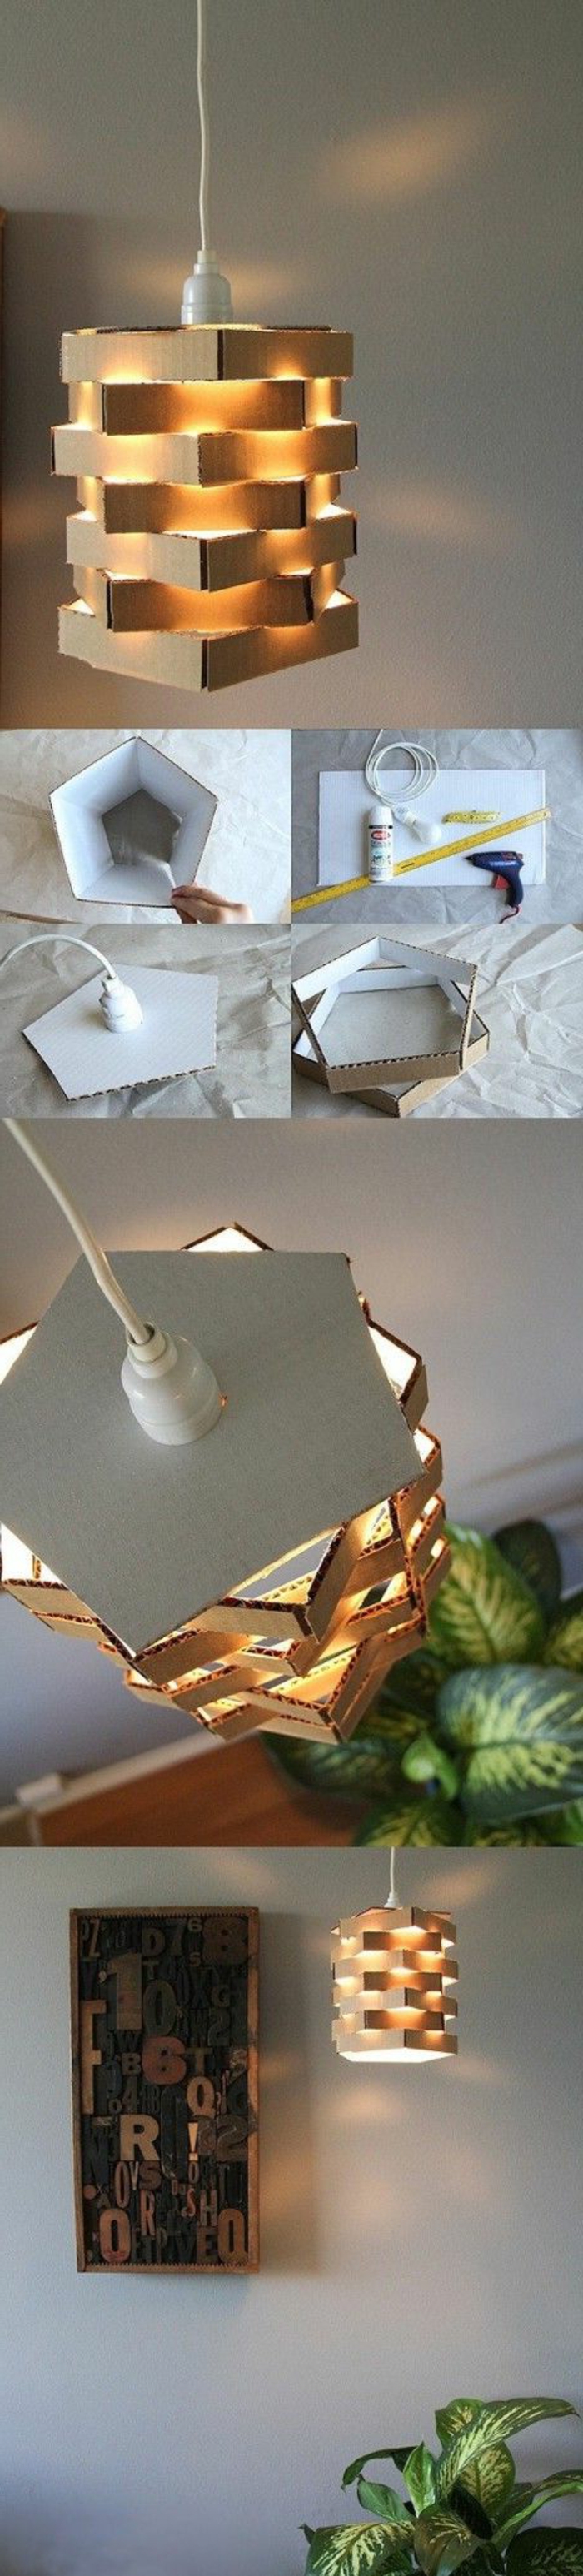 Lampenschirm selber machen: DIY Lampenschirm aus Karton, Umzugskarton, unregelmäßige Form